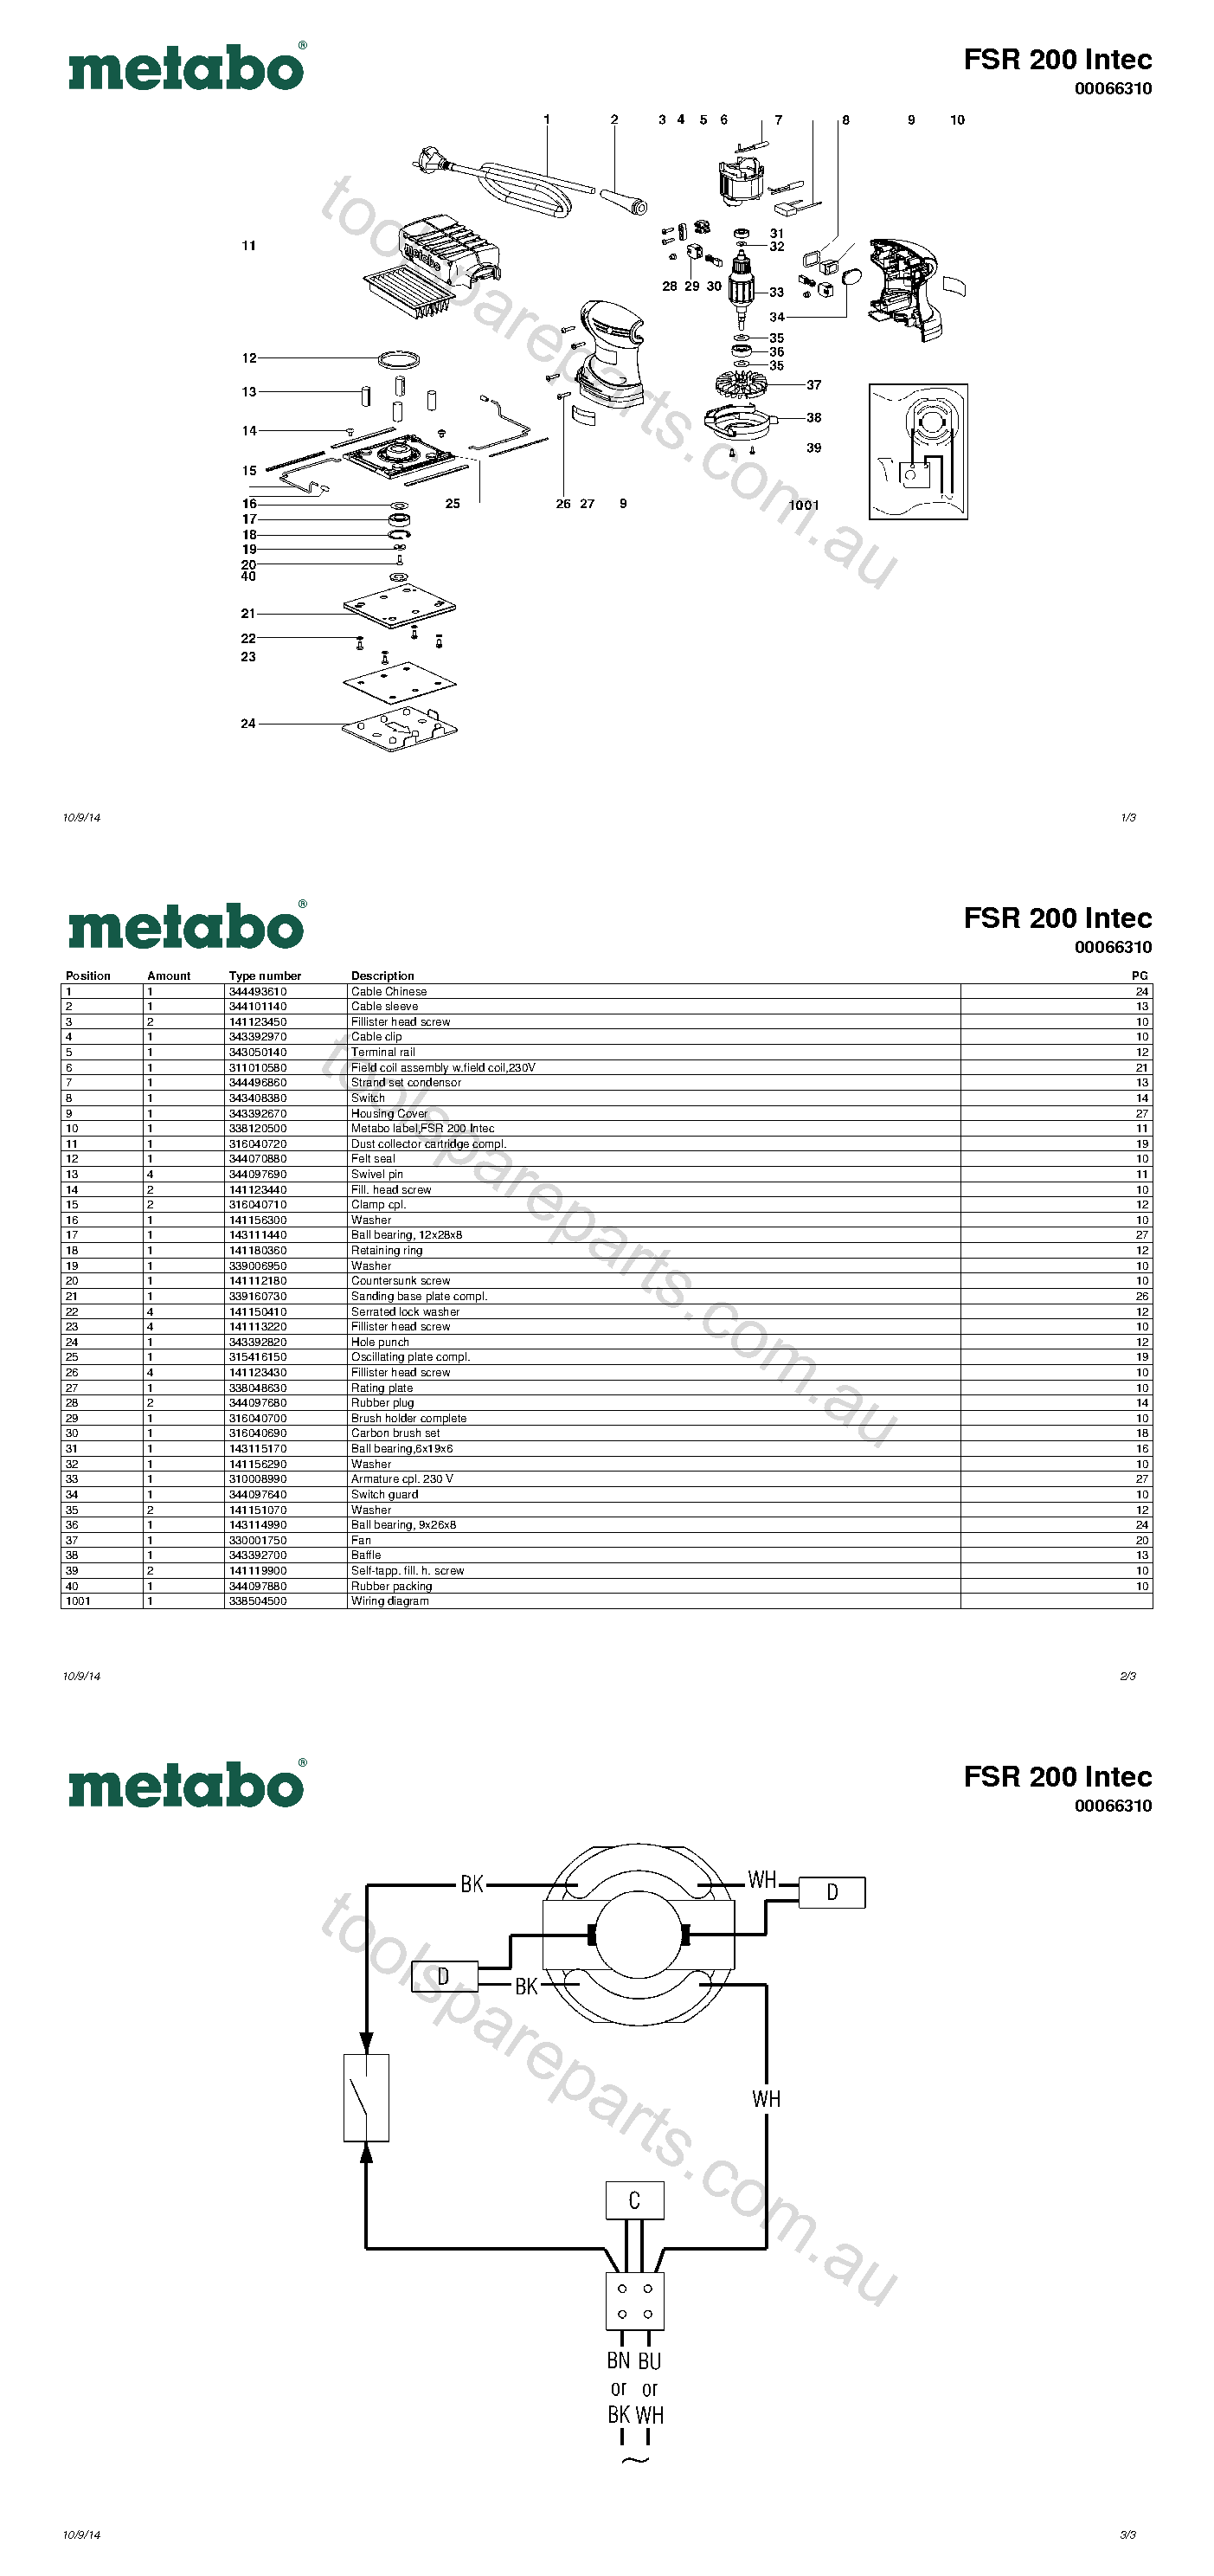 Metabo FSR 200 Intec 00066310  Diagram 1